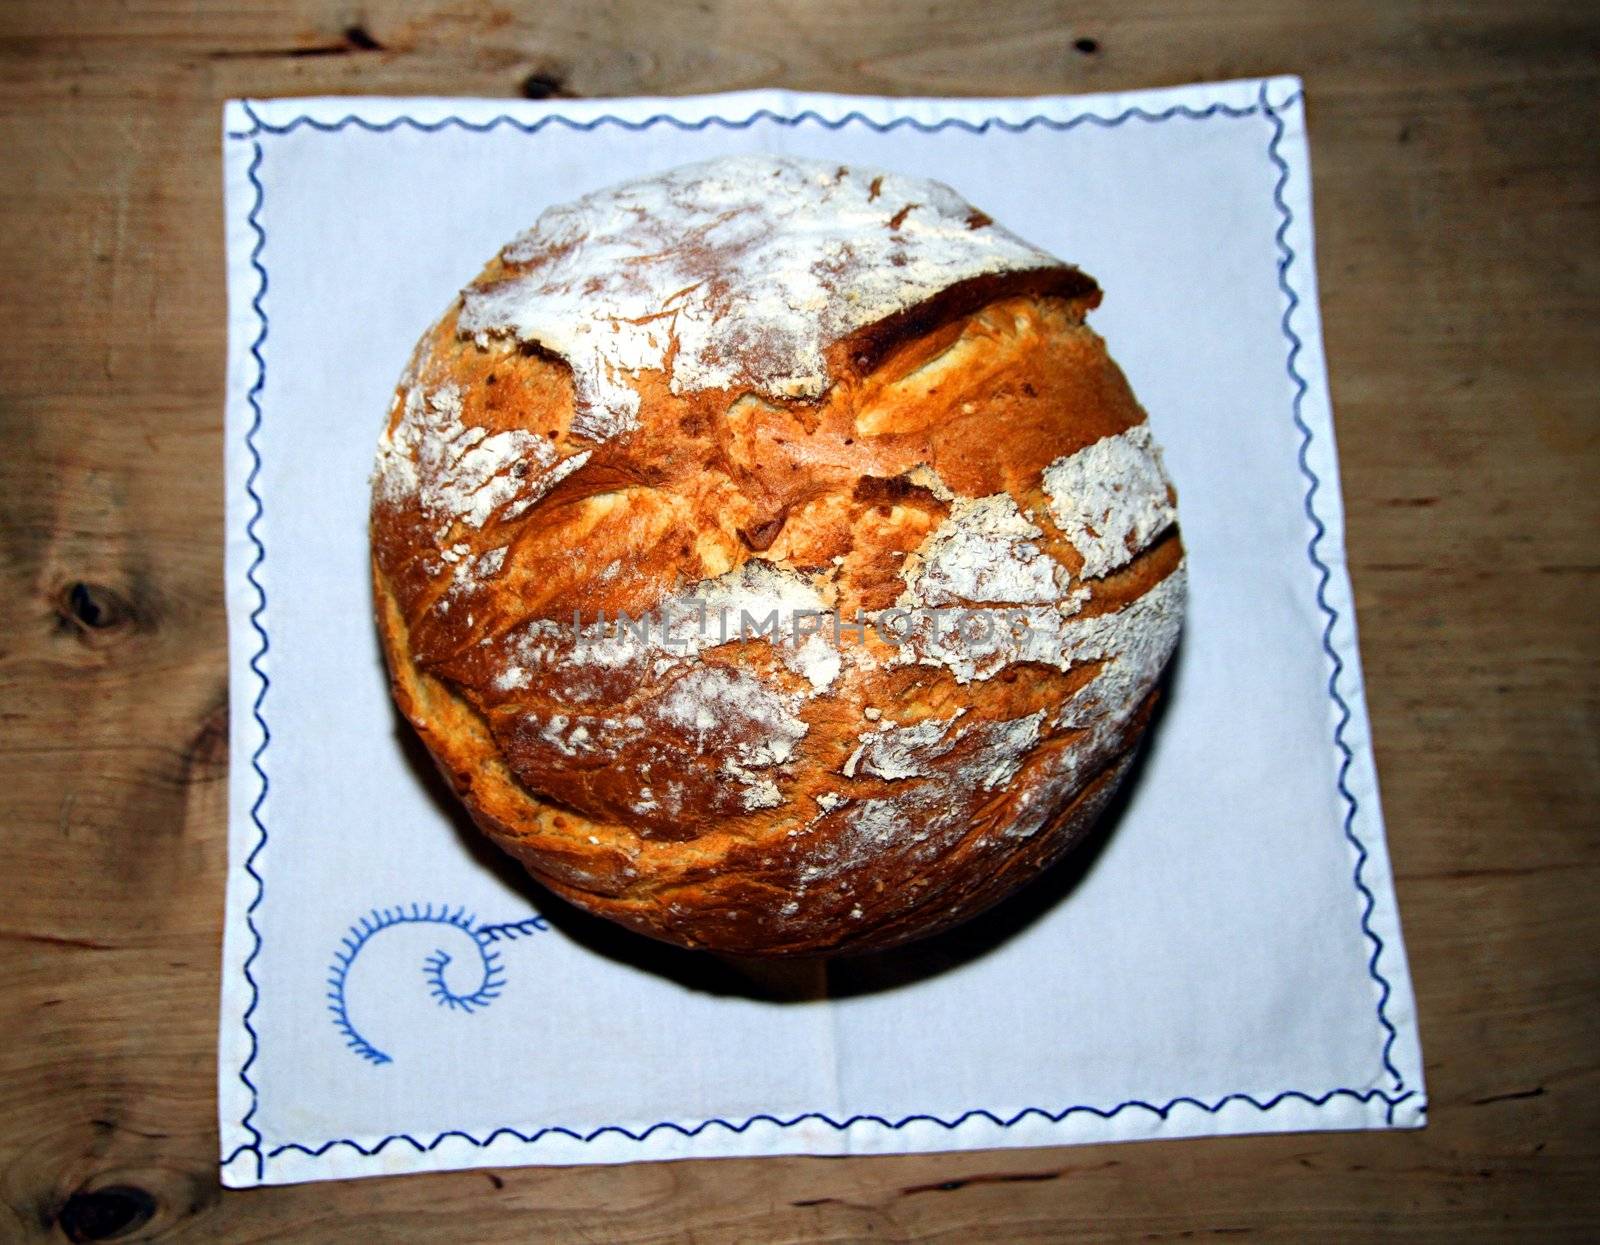 Homemade bread by sundaune